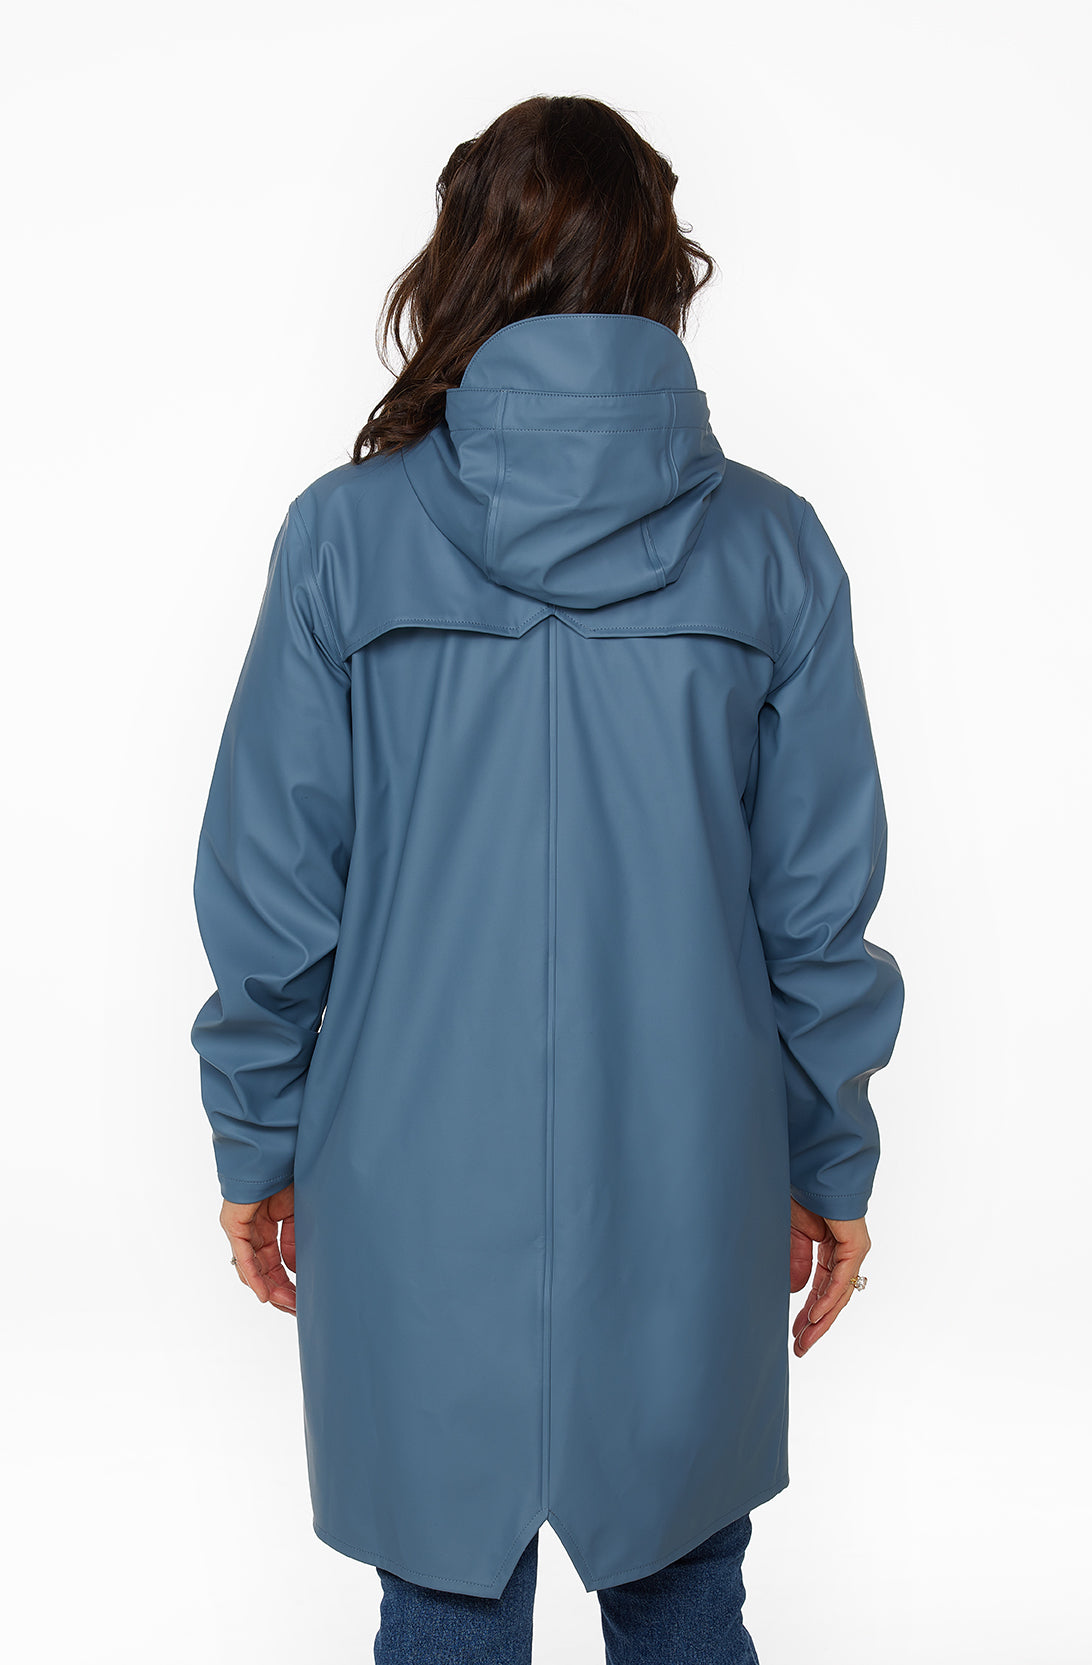 Windfield / Danwear Liesa Raincoat 61 Mirage